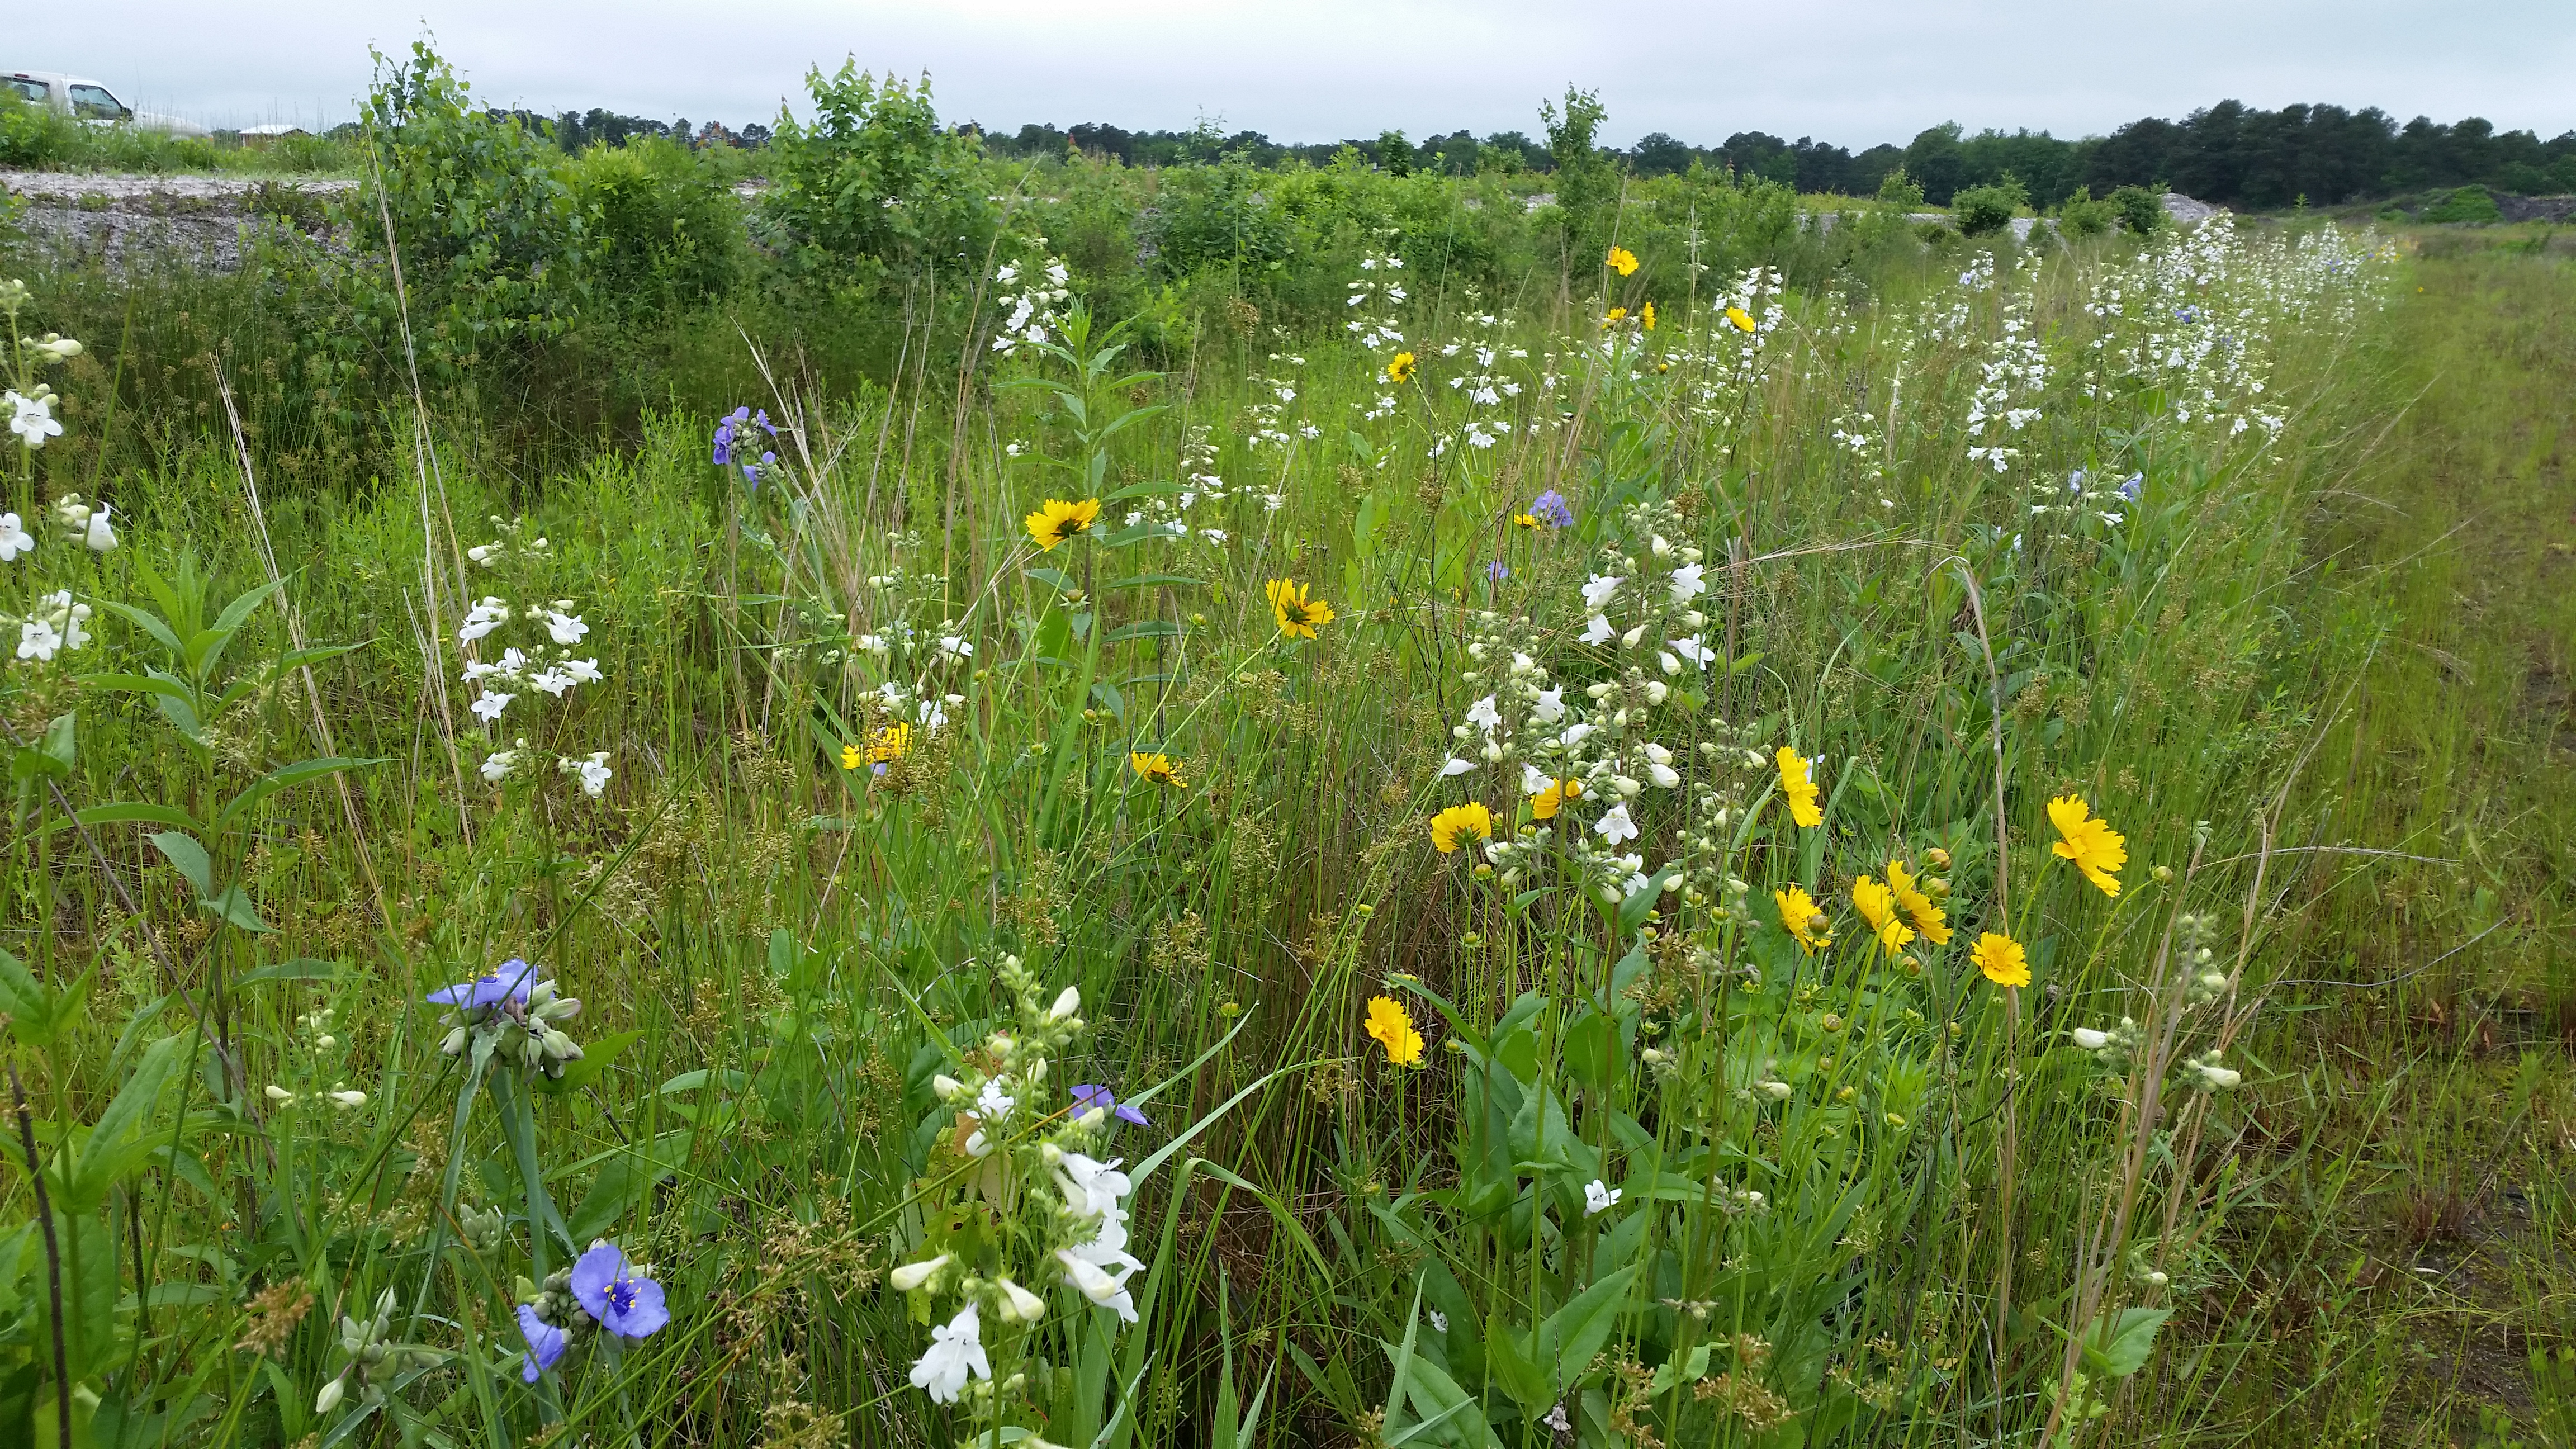 Pollinator meadow strip along cranberry fields. 